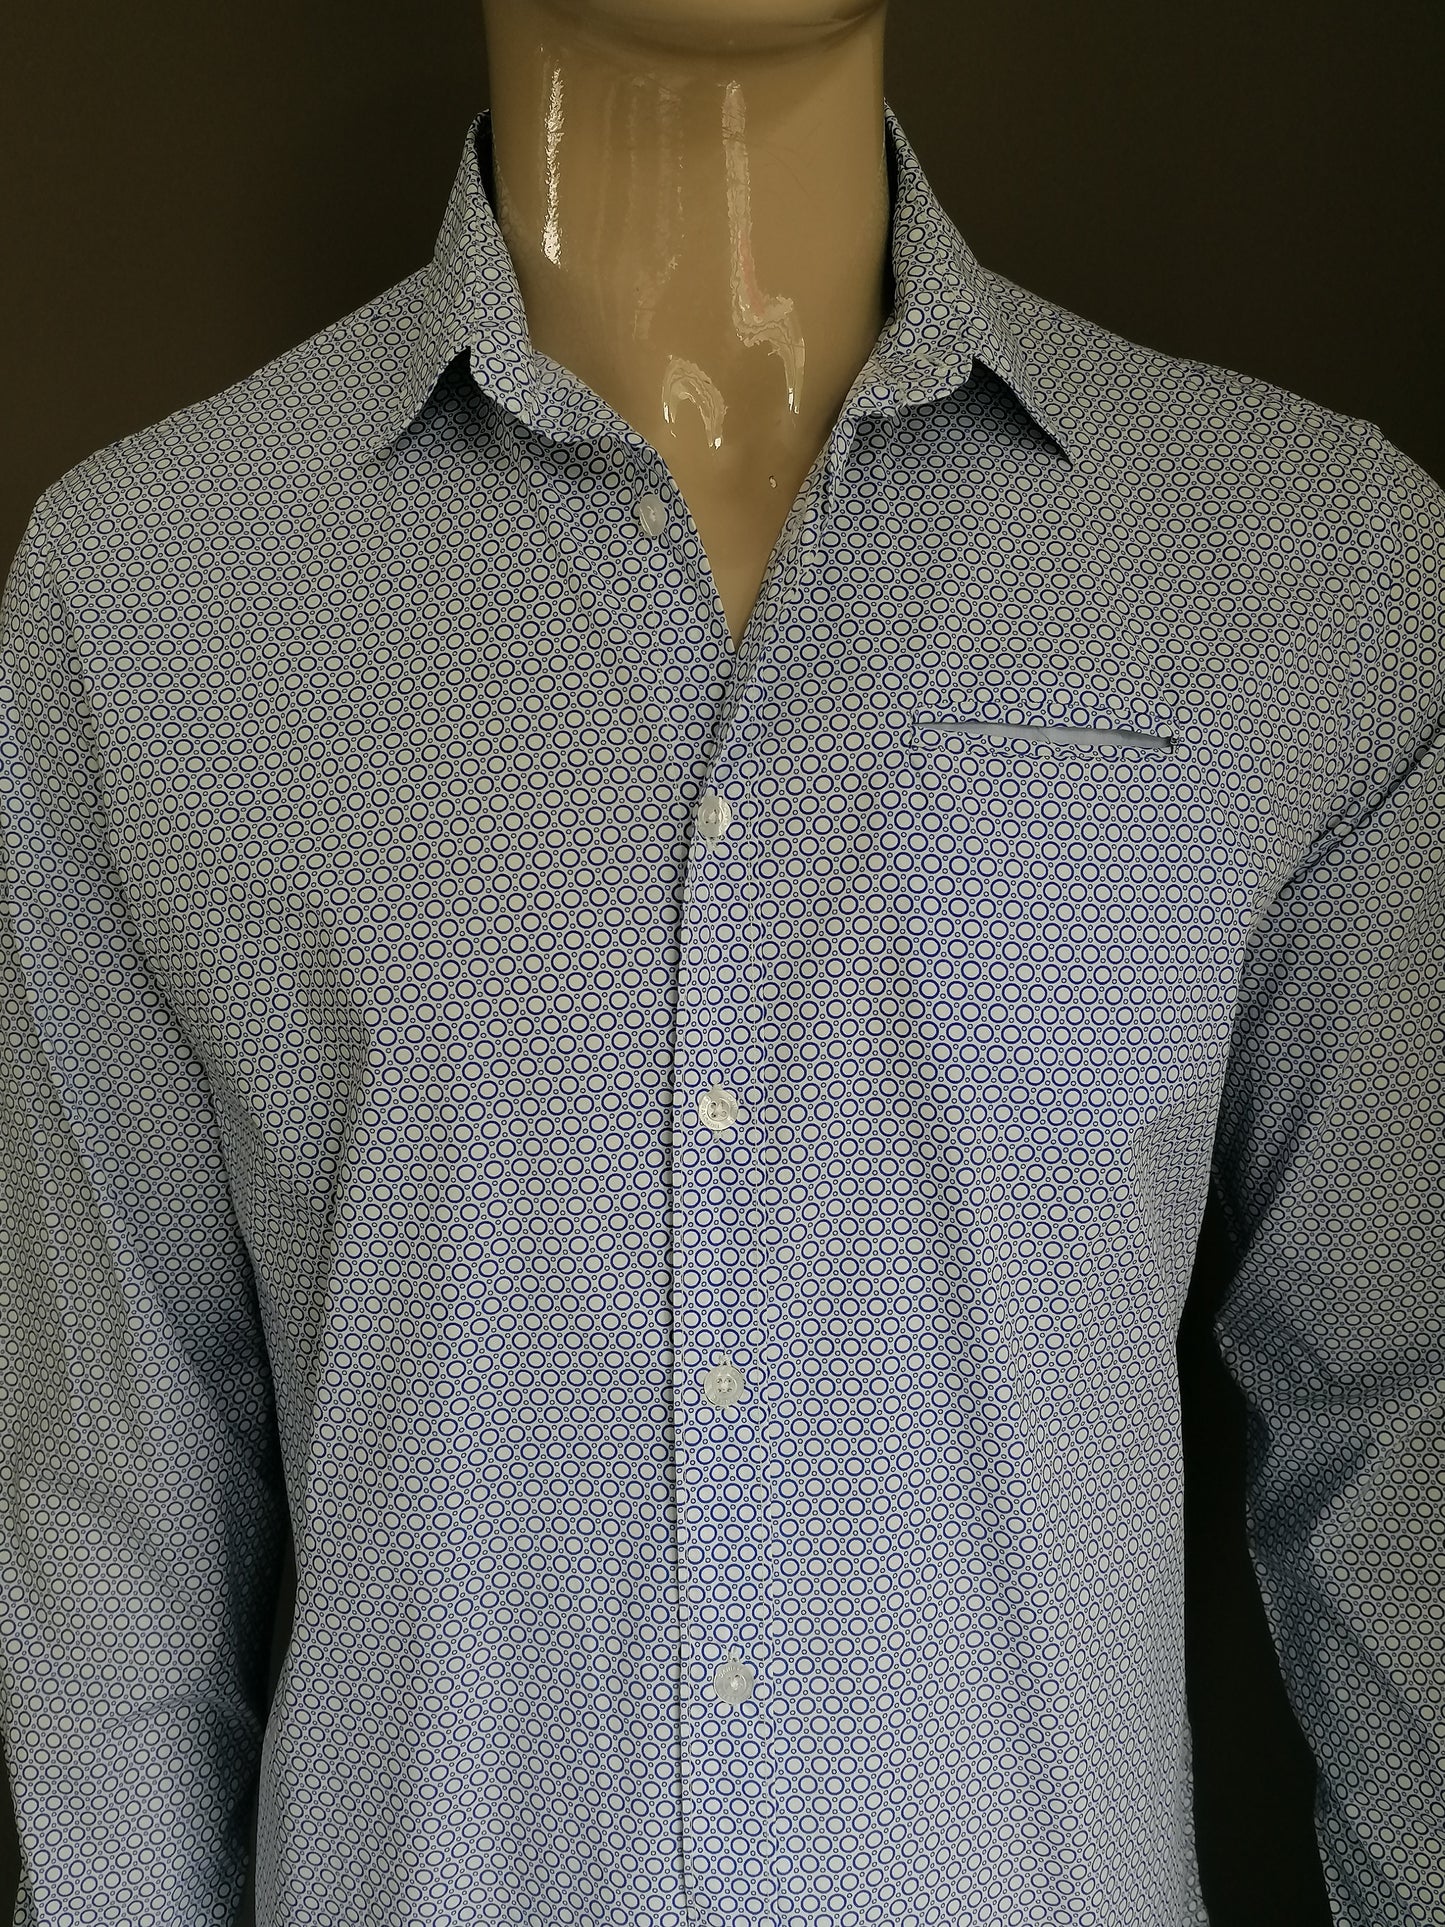 Grey Daniele Alessandrini overhemd. Blauw Witte cirkel print. Maat 42 / L.